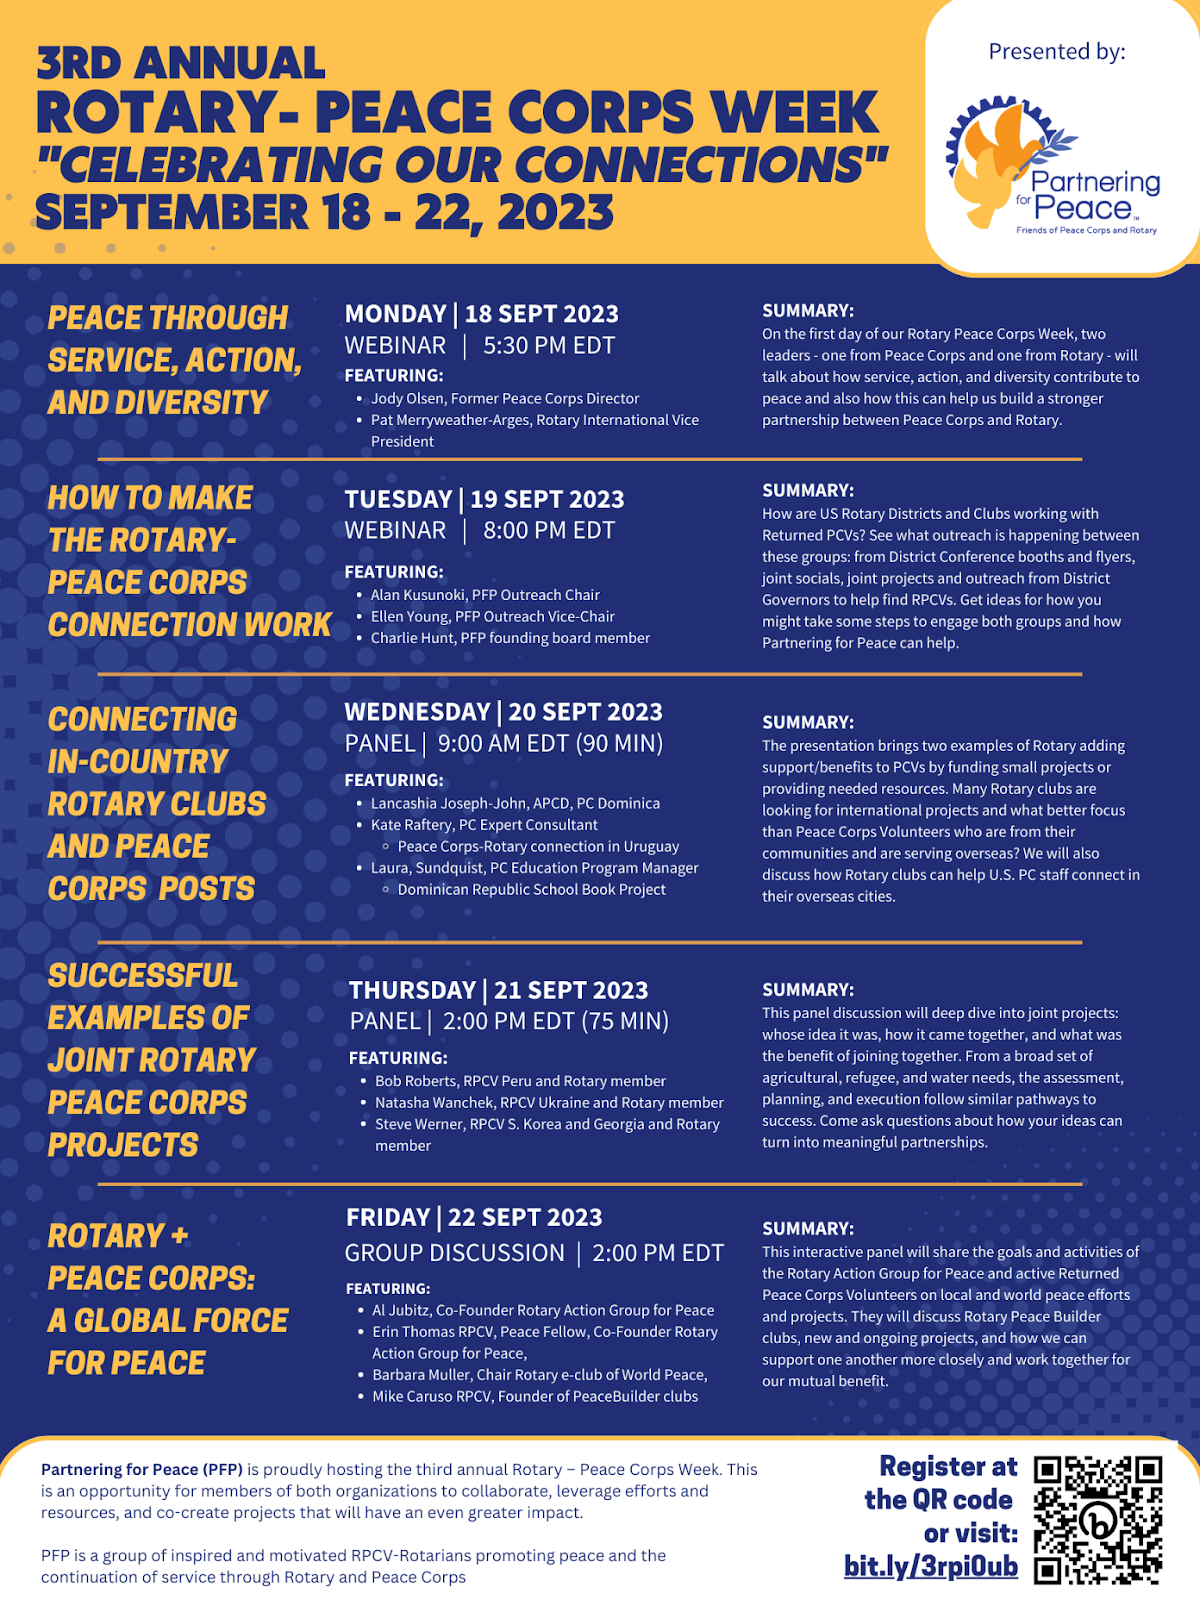 3rd Annual Rotary Peace Corps Week